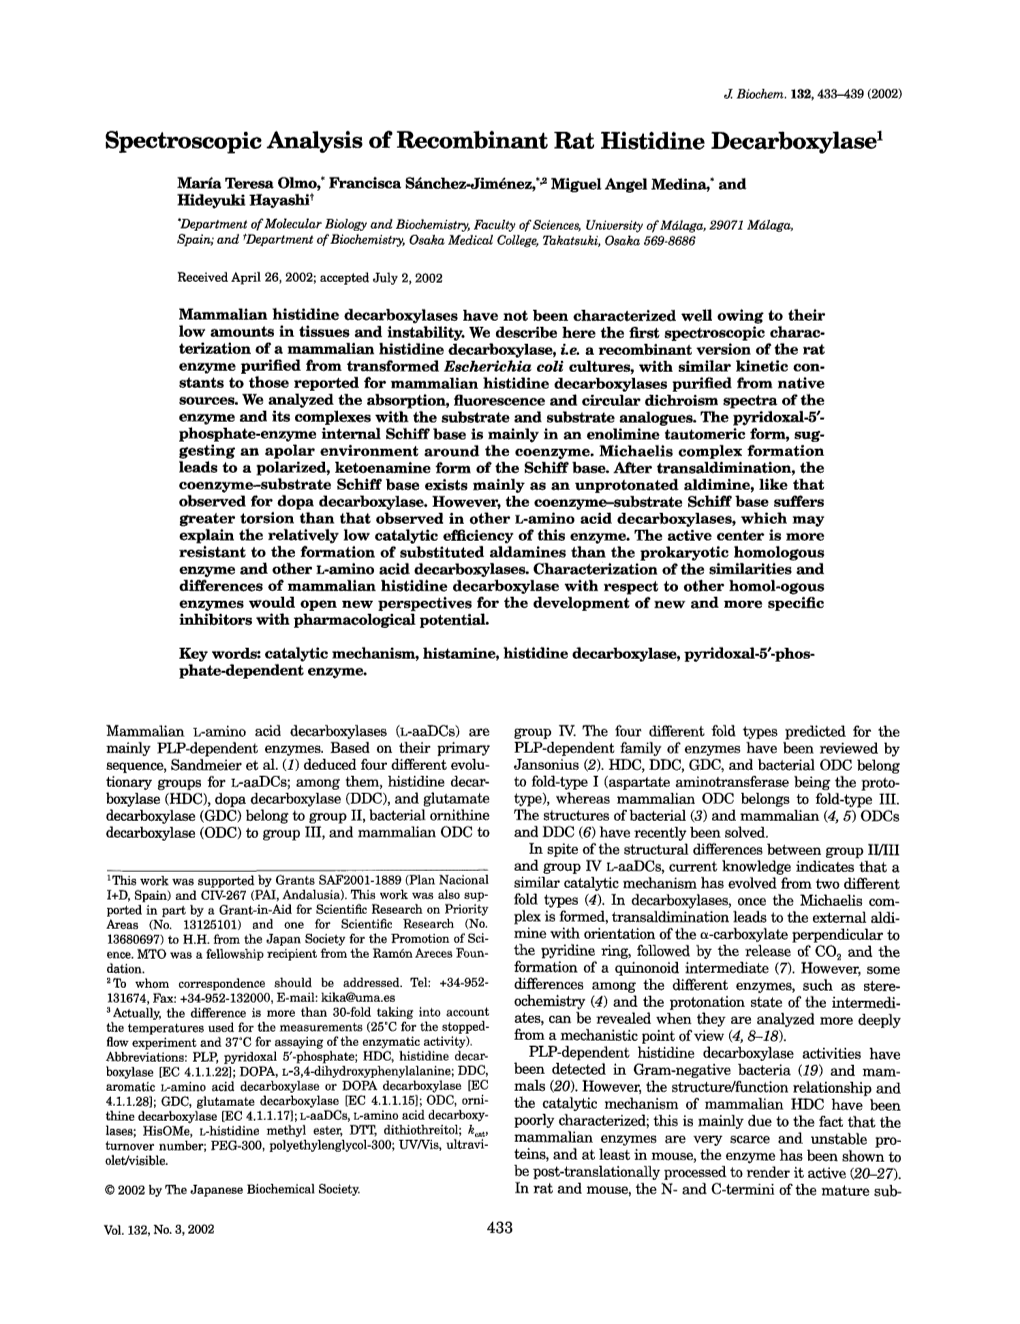 Spectroscopic Analysis of Recombinant Rat Histidine Decarboxylasel